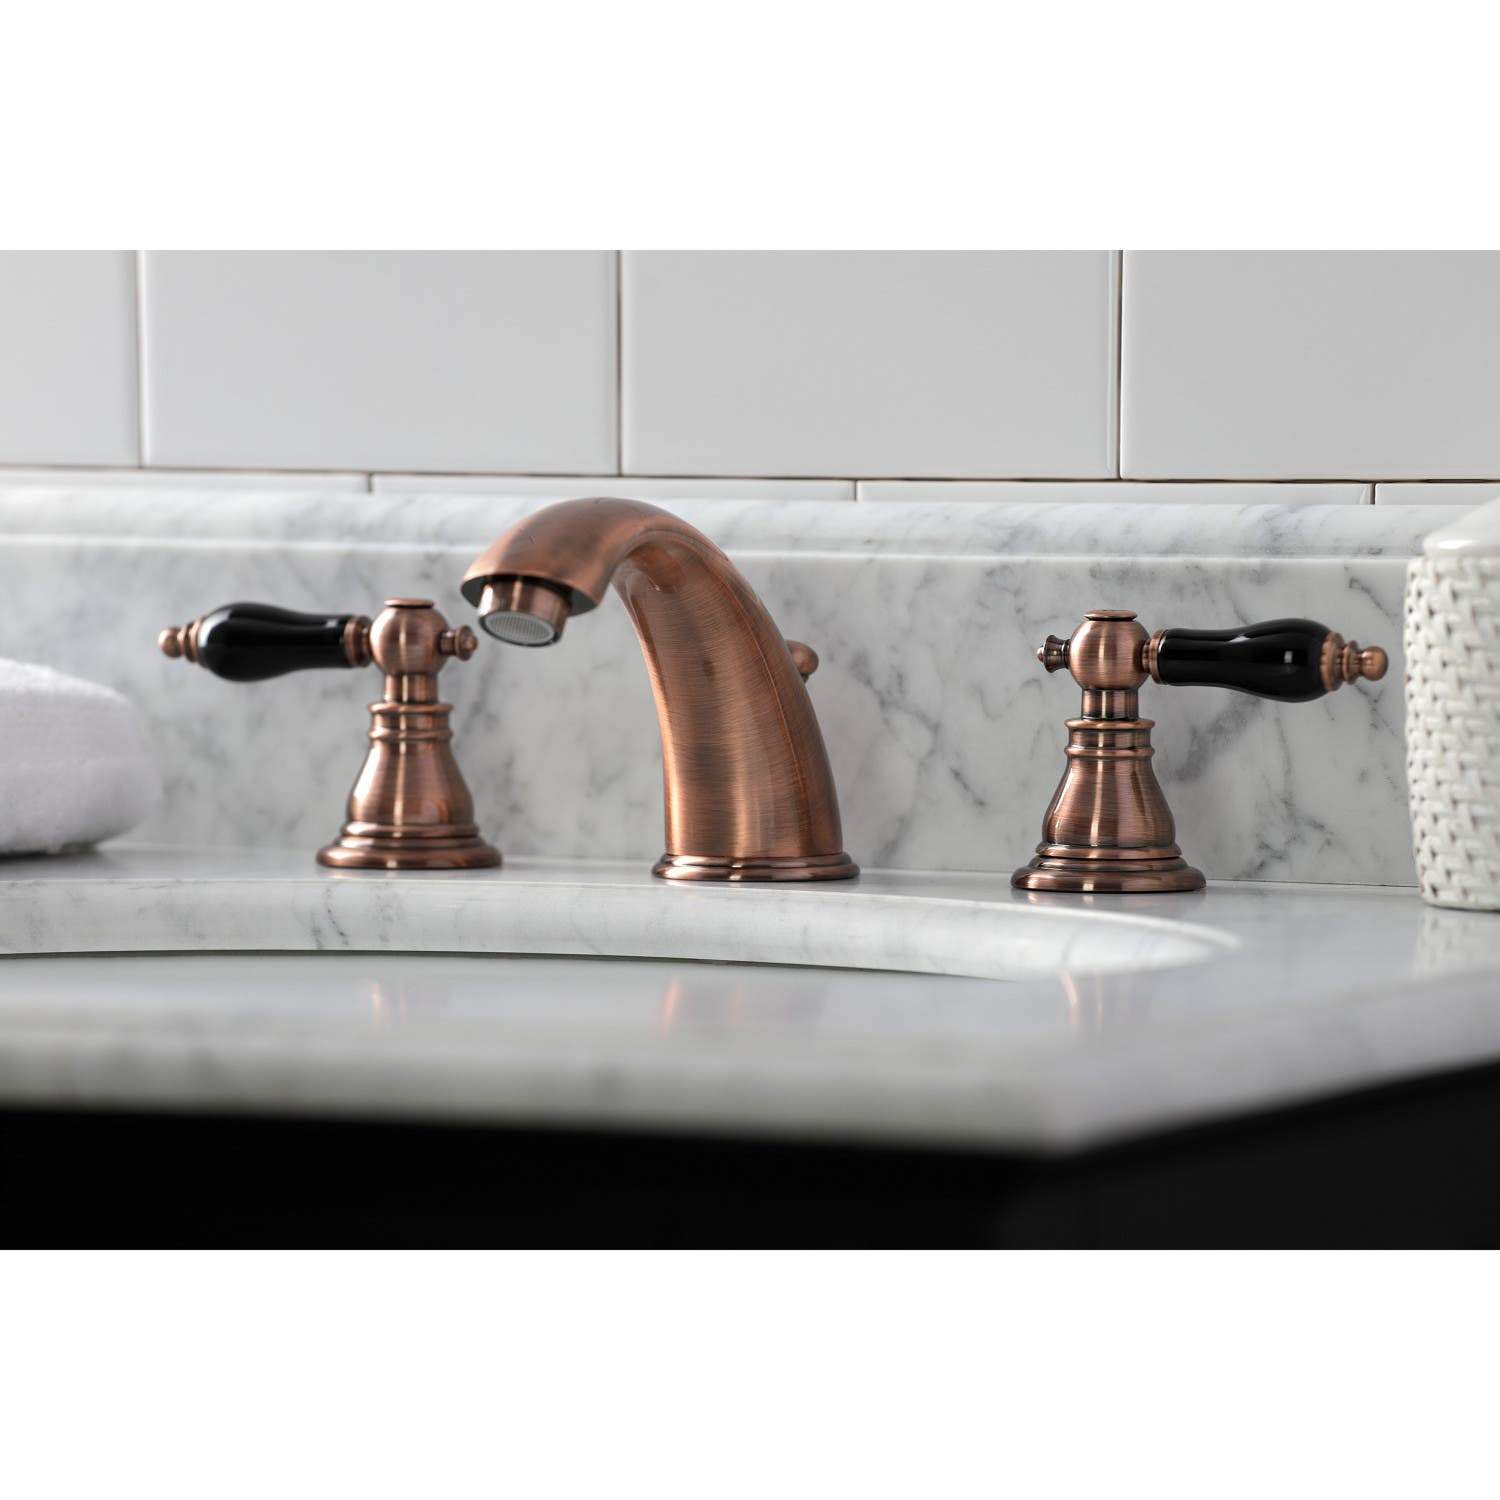 Kingston Brass KB96XAKL-P Duchess Widespread Bathroom Faucet with Plastic Pop-Up